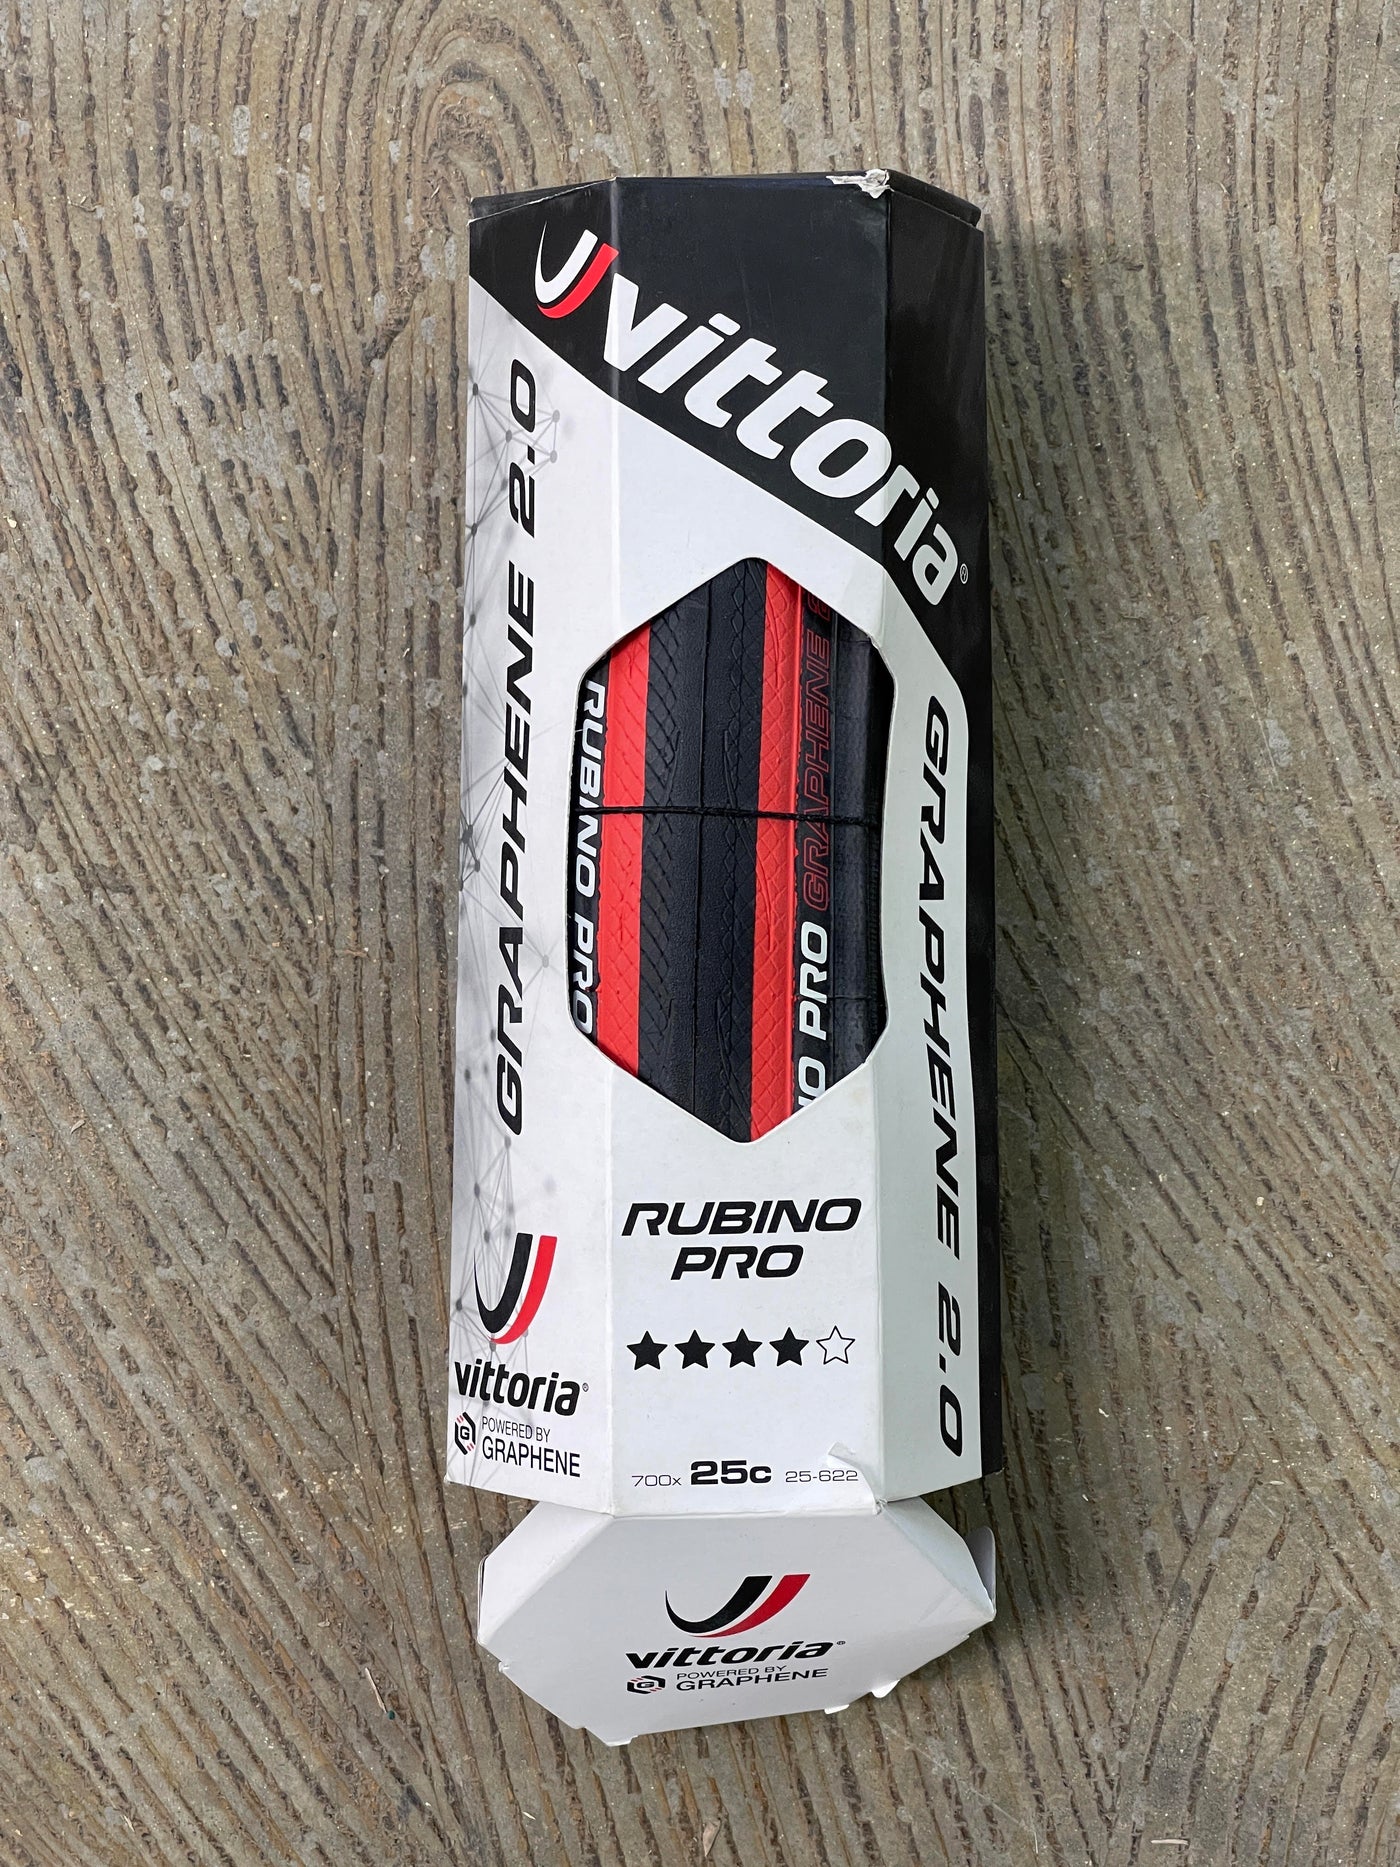 Vittoria Rubino Pro G2.0 Tubular Tire (Damaged Packaging)